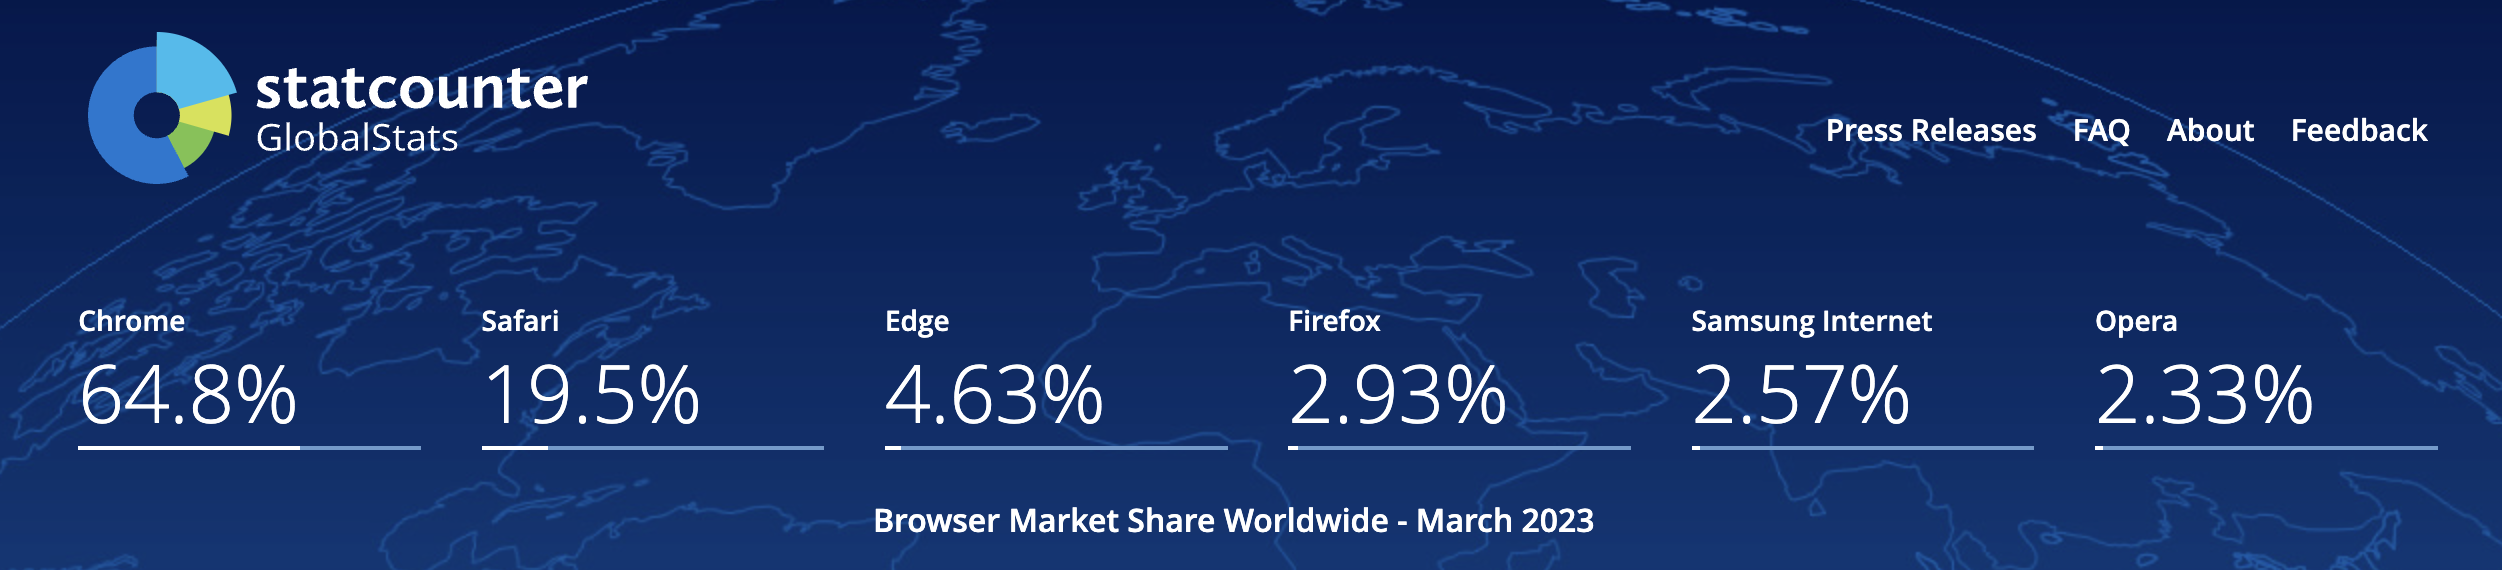 Browser market share worldwide march 2023